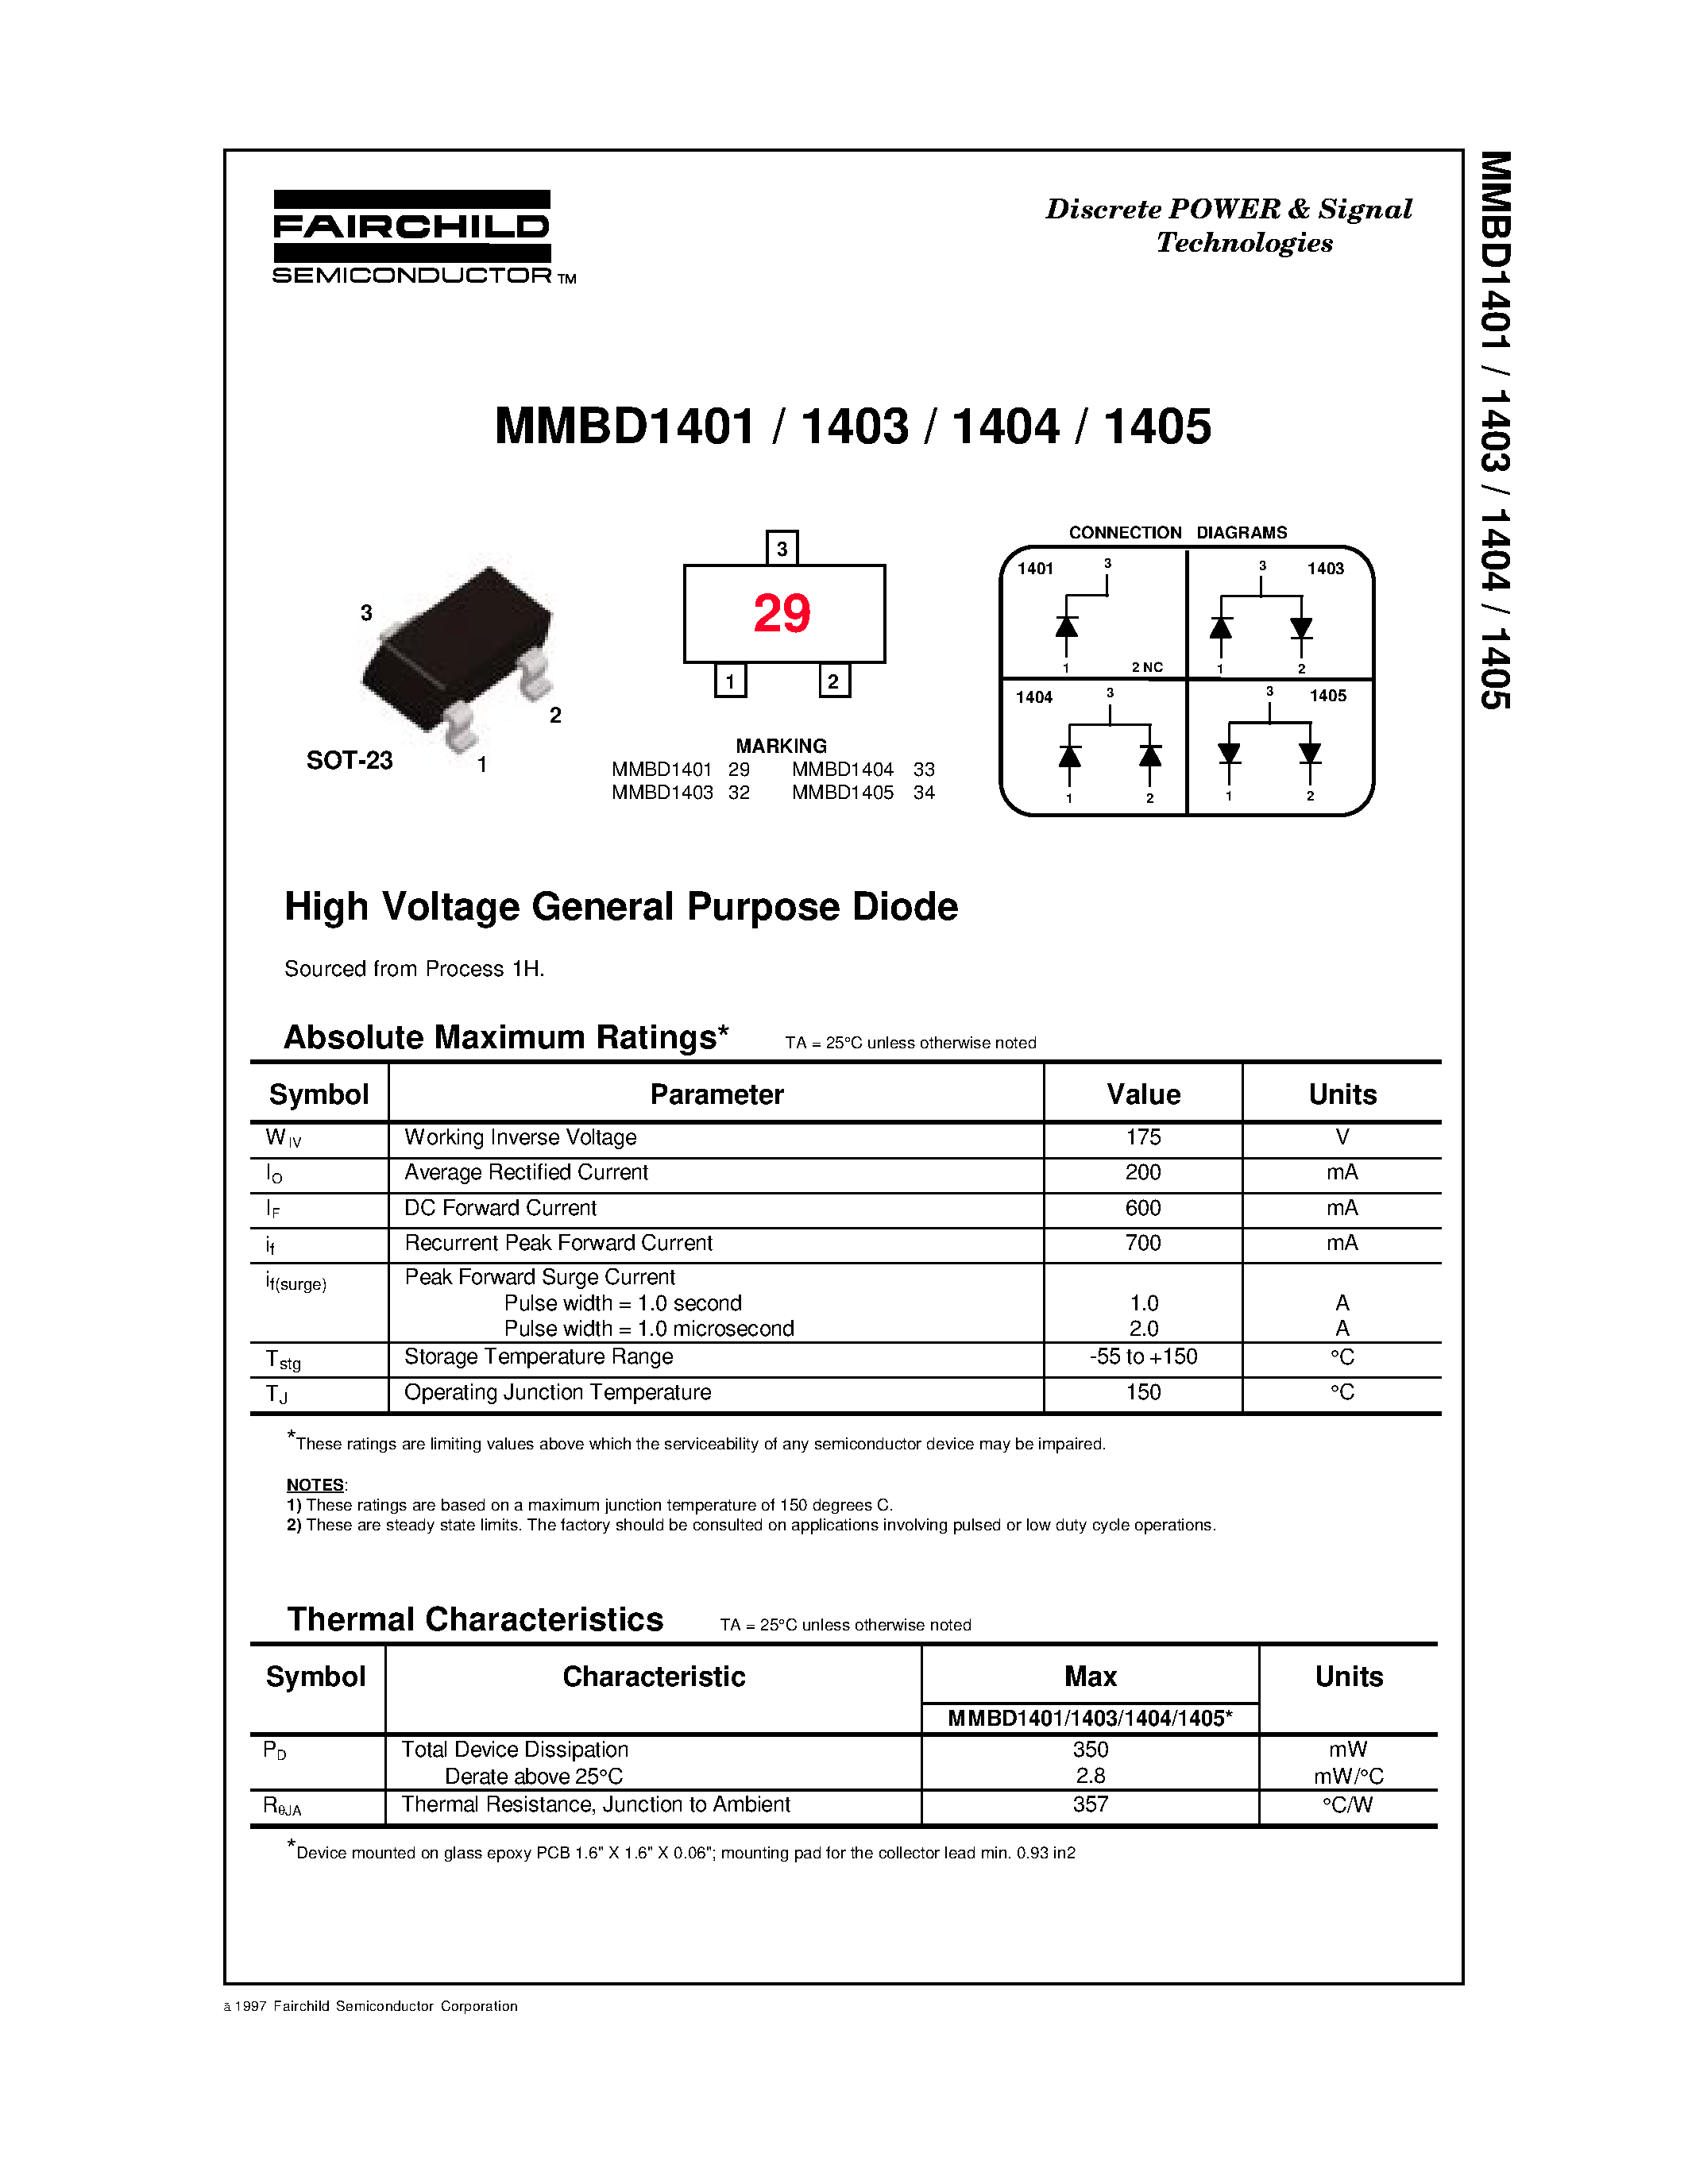 Datasheet MMBD1401 - High Voltage General Purpose Diode page 1